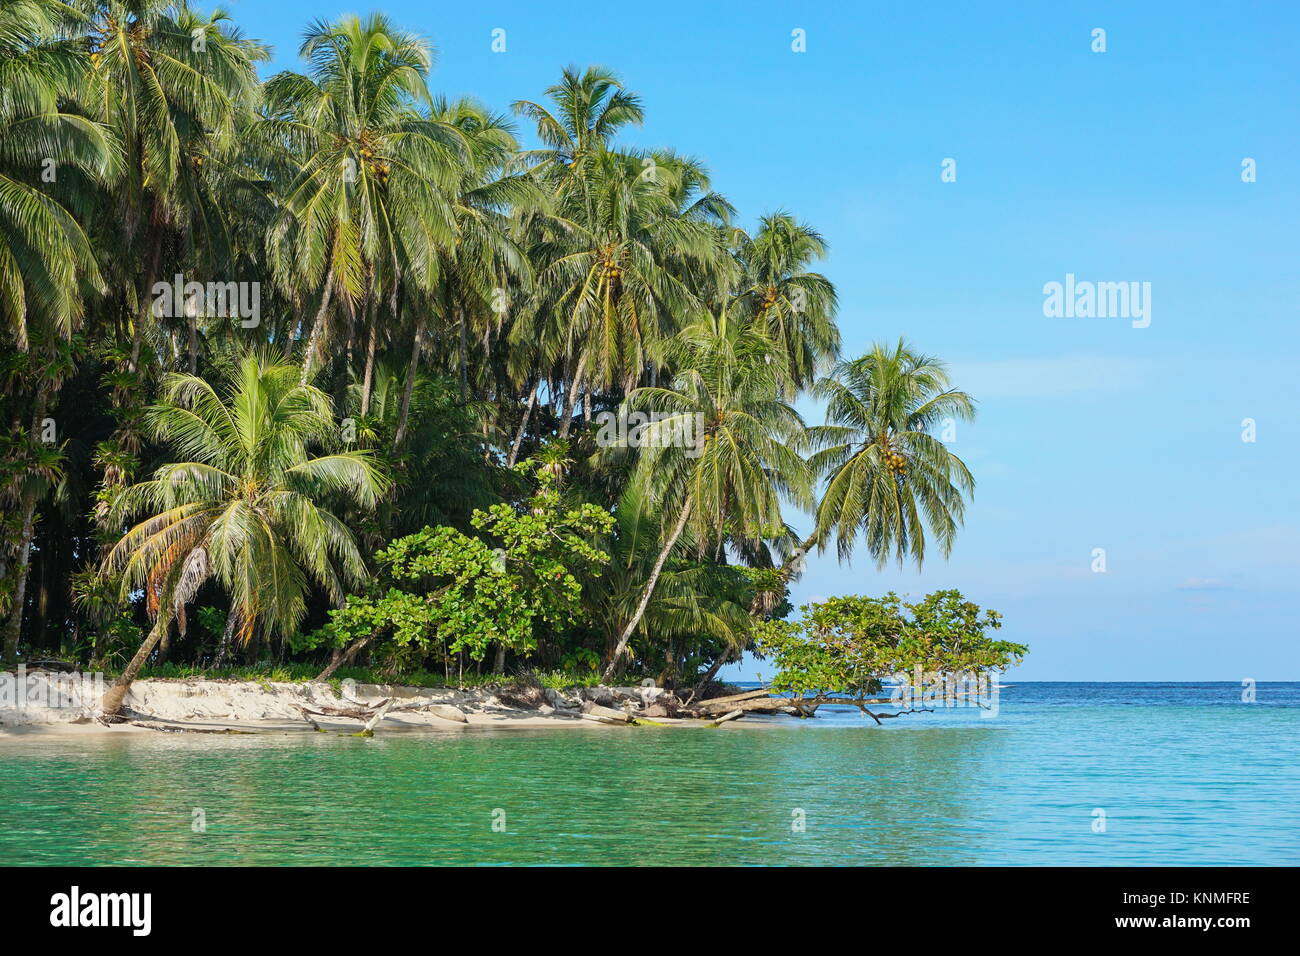 Lush tropical seashore with coconut palm trees and almond trees, Caribbean sea, Bocas del Toro, Panama, Central America Stock Photo